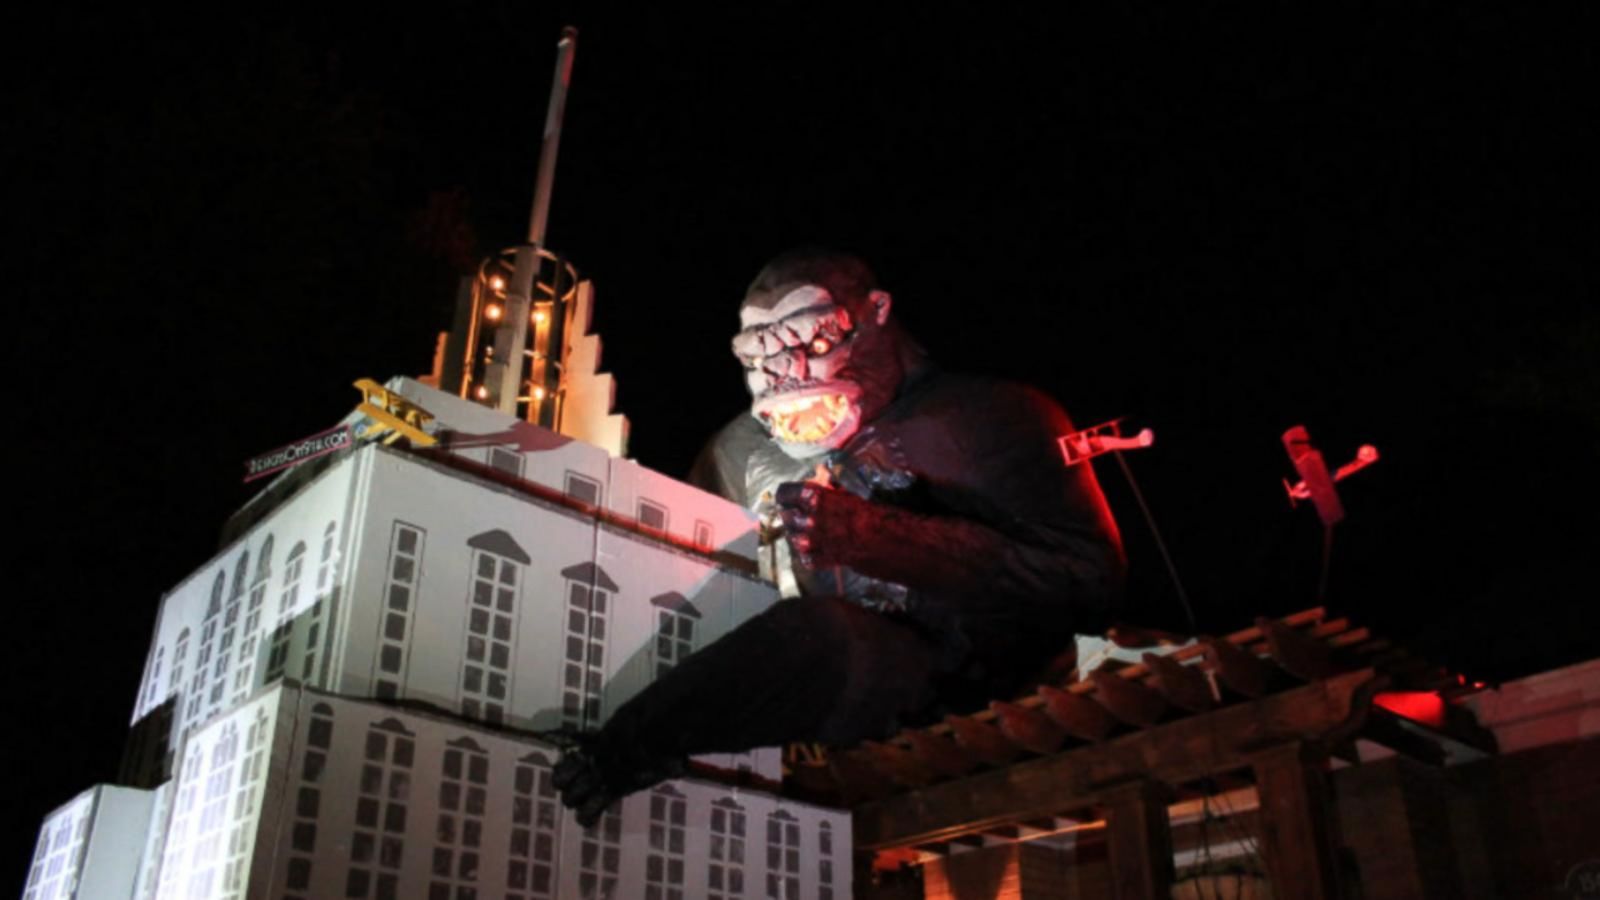 Man builds massive King Kong display in yard for Halloween - Good Morning  America